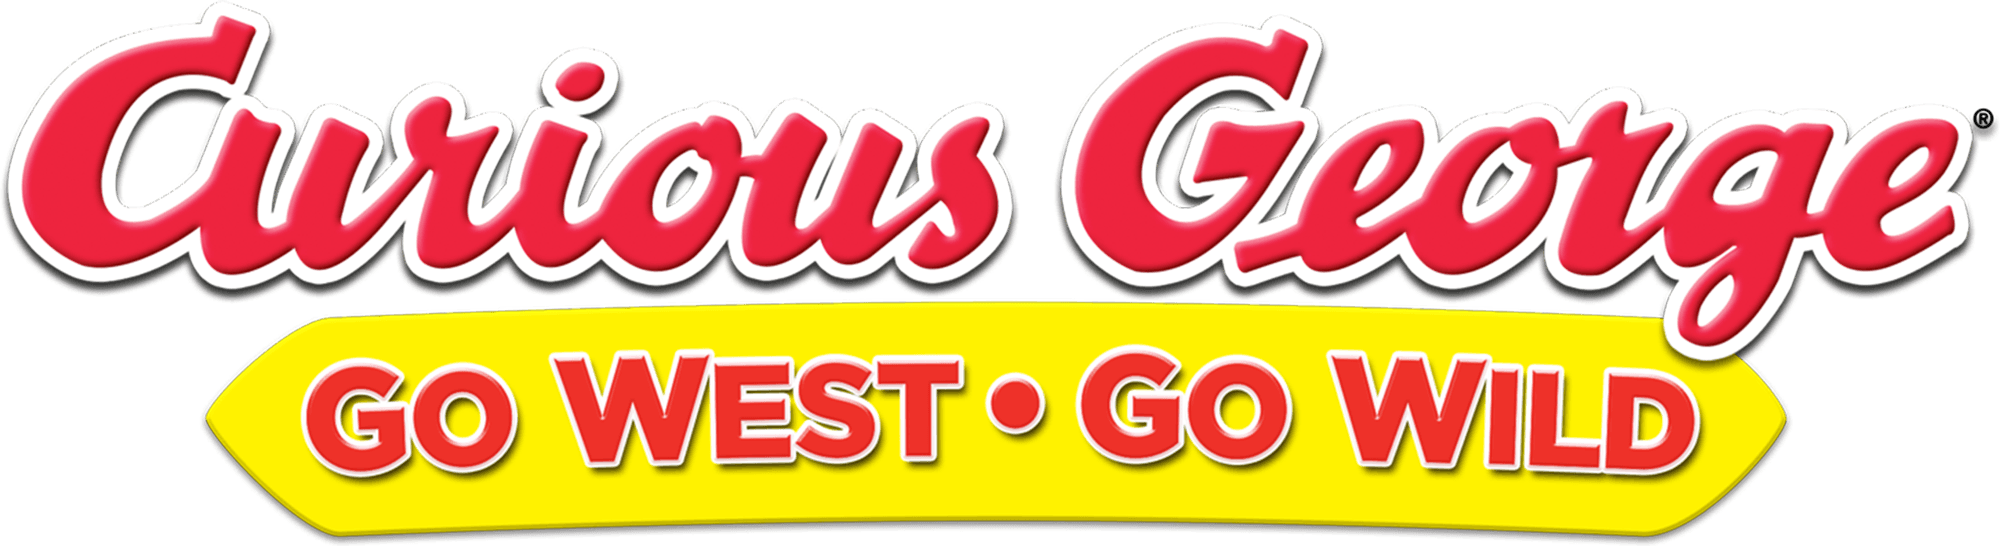 Curious George: Go West, Go Wild logo